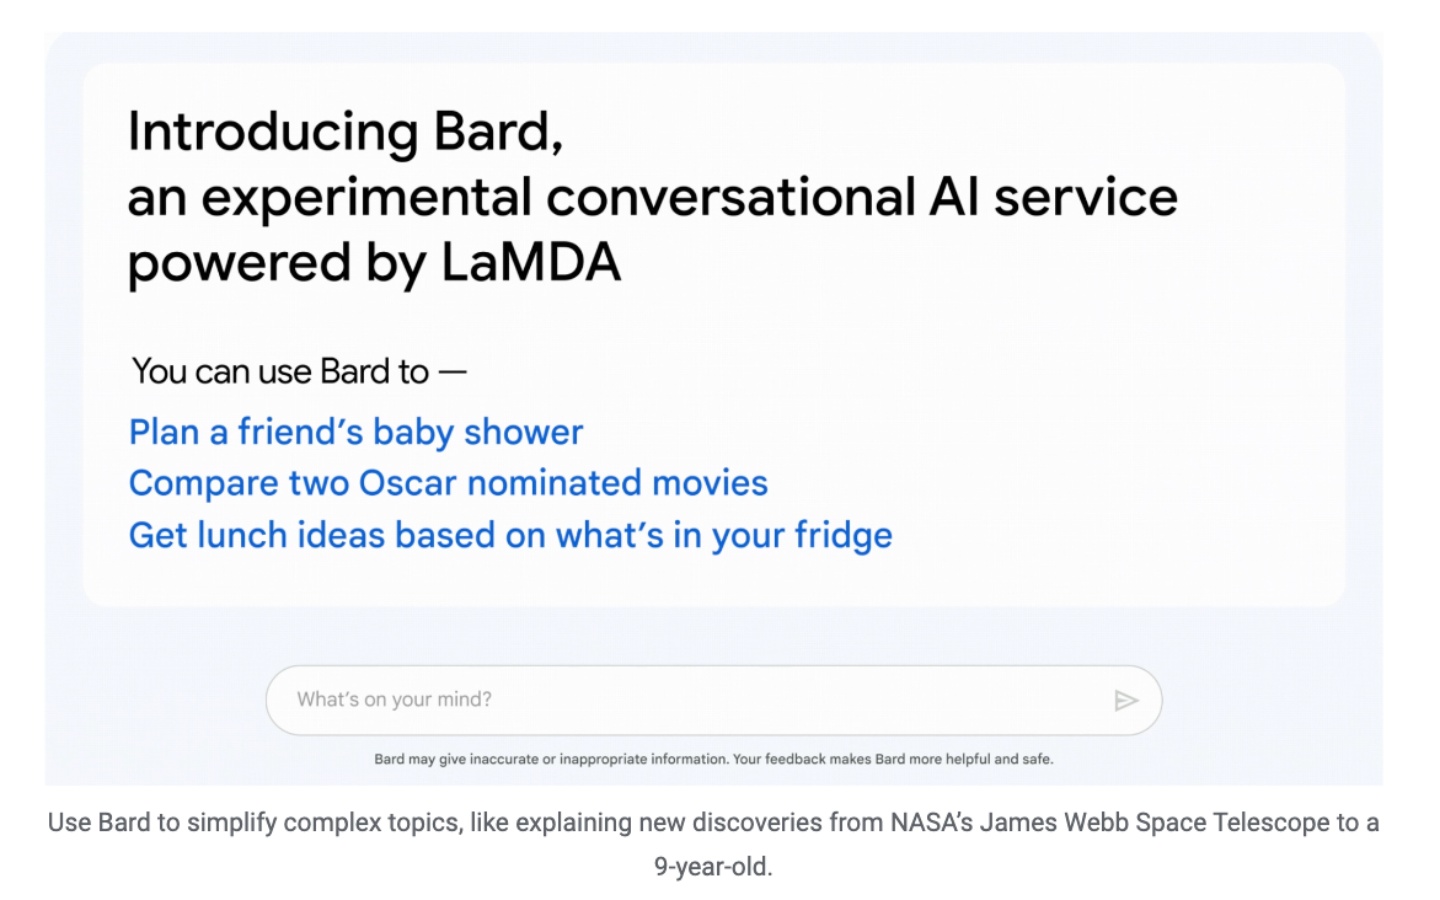 Google 迎戰 ChatGPT 發表聊天機器人 Bard！但微軟不示弱表示 AI 部分將有重大進展發表